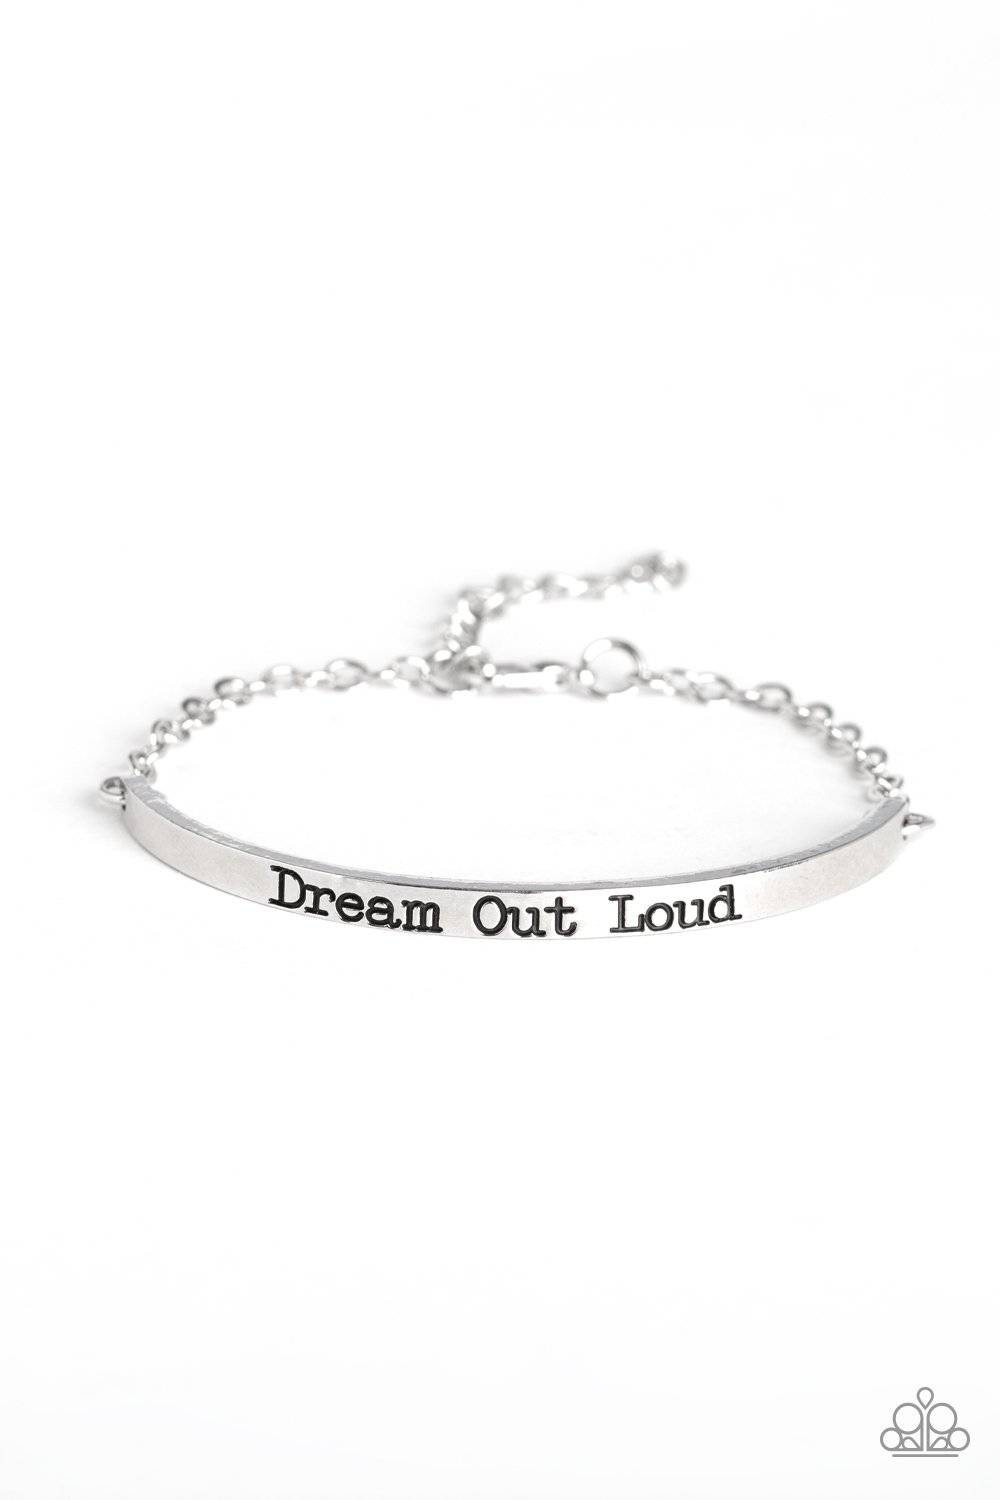 Dream Out Loud - Silver Inspirational Bracelet - Paparazzi Accessories - GlaMarous Titi Jewels